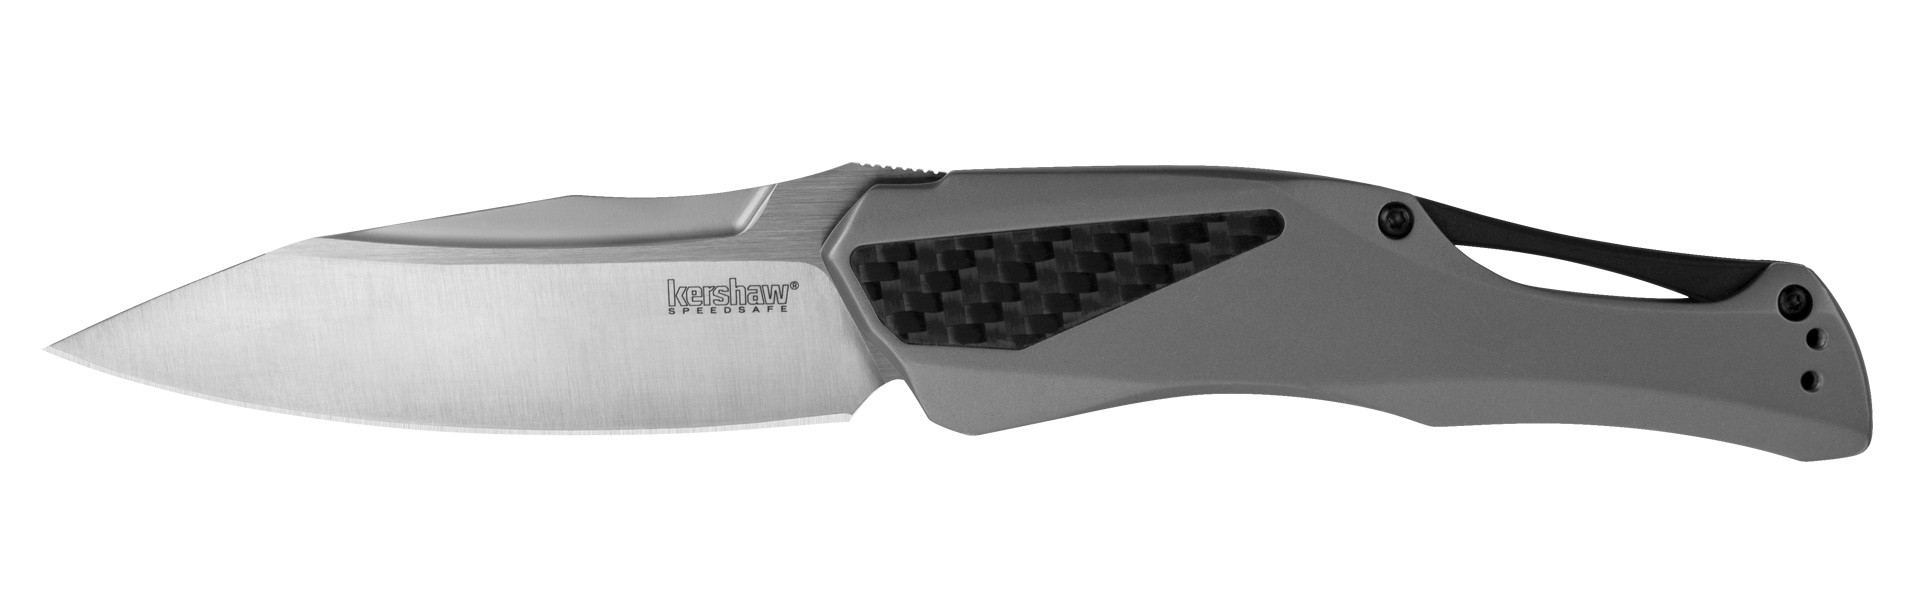 Нож Kershaw Collateral складной сталь D2 рукоять карбон - фото 1